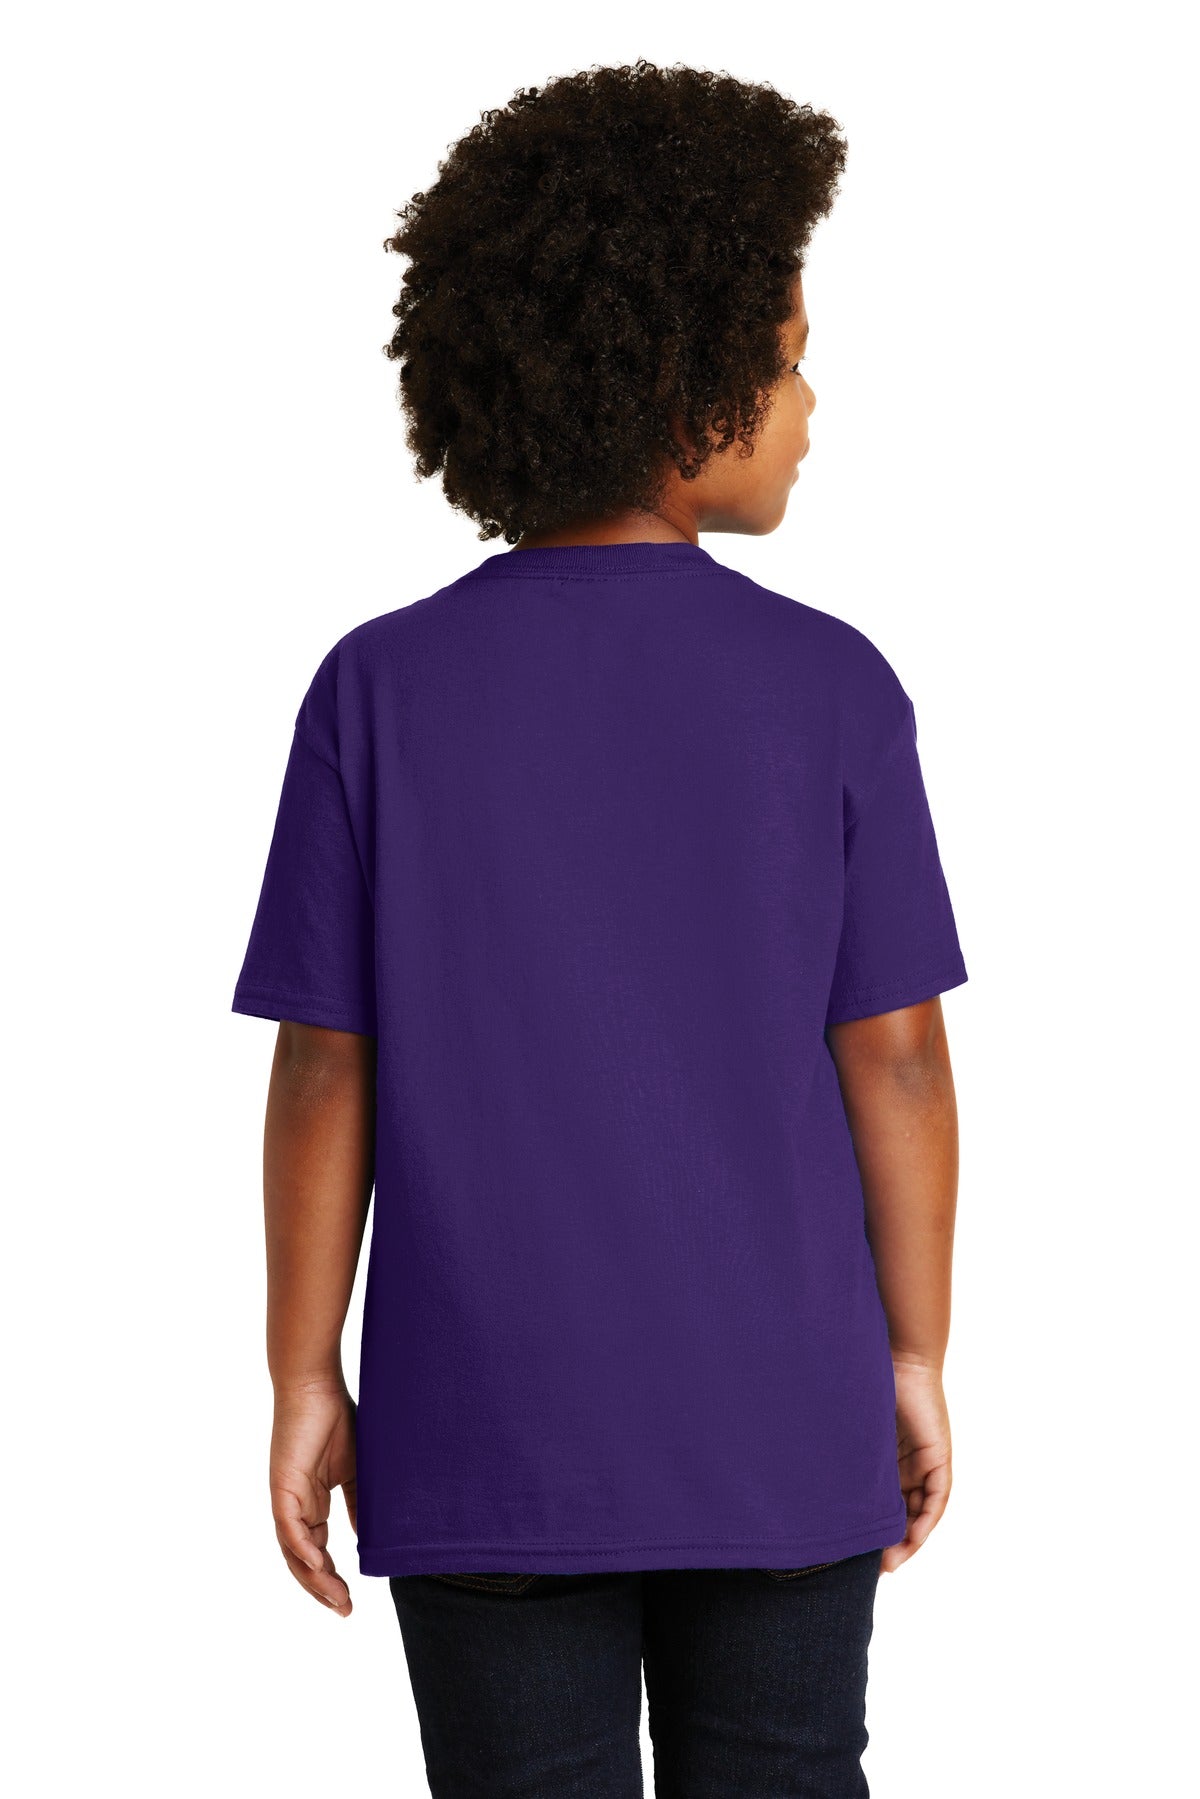 Gildan - Youth Ultra Cotton 100% US Cotton T-Shirt. 2000B - Purple